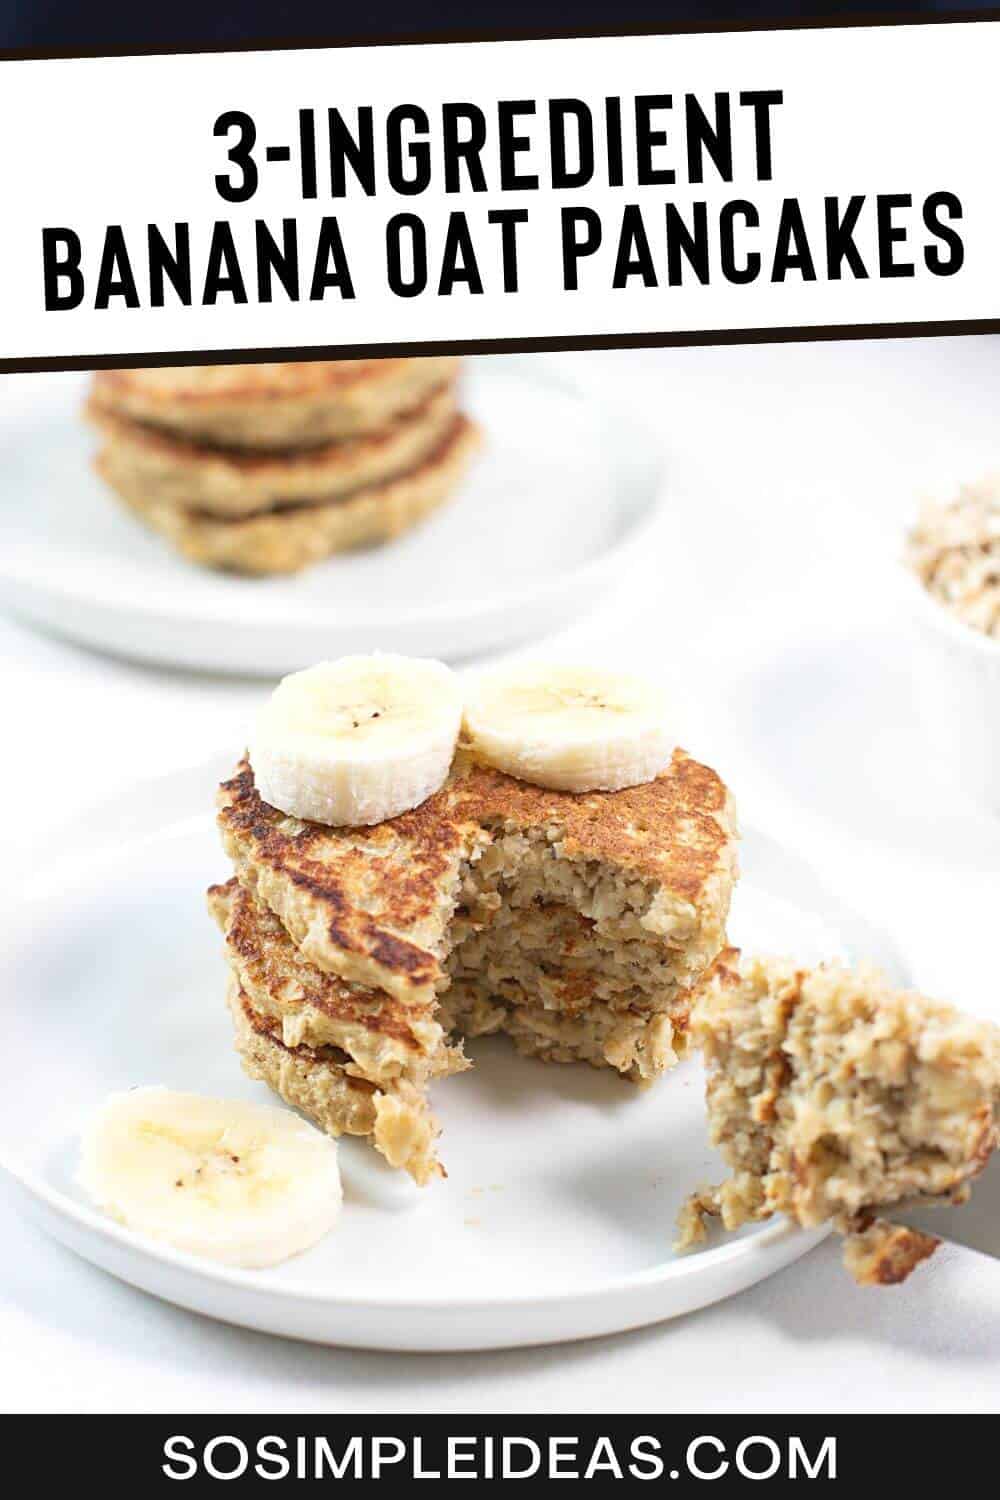 banana oat pancakes pinterest image.